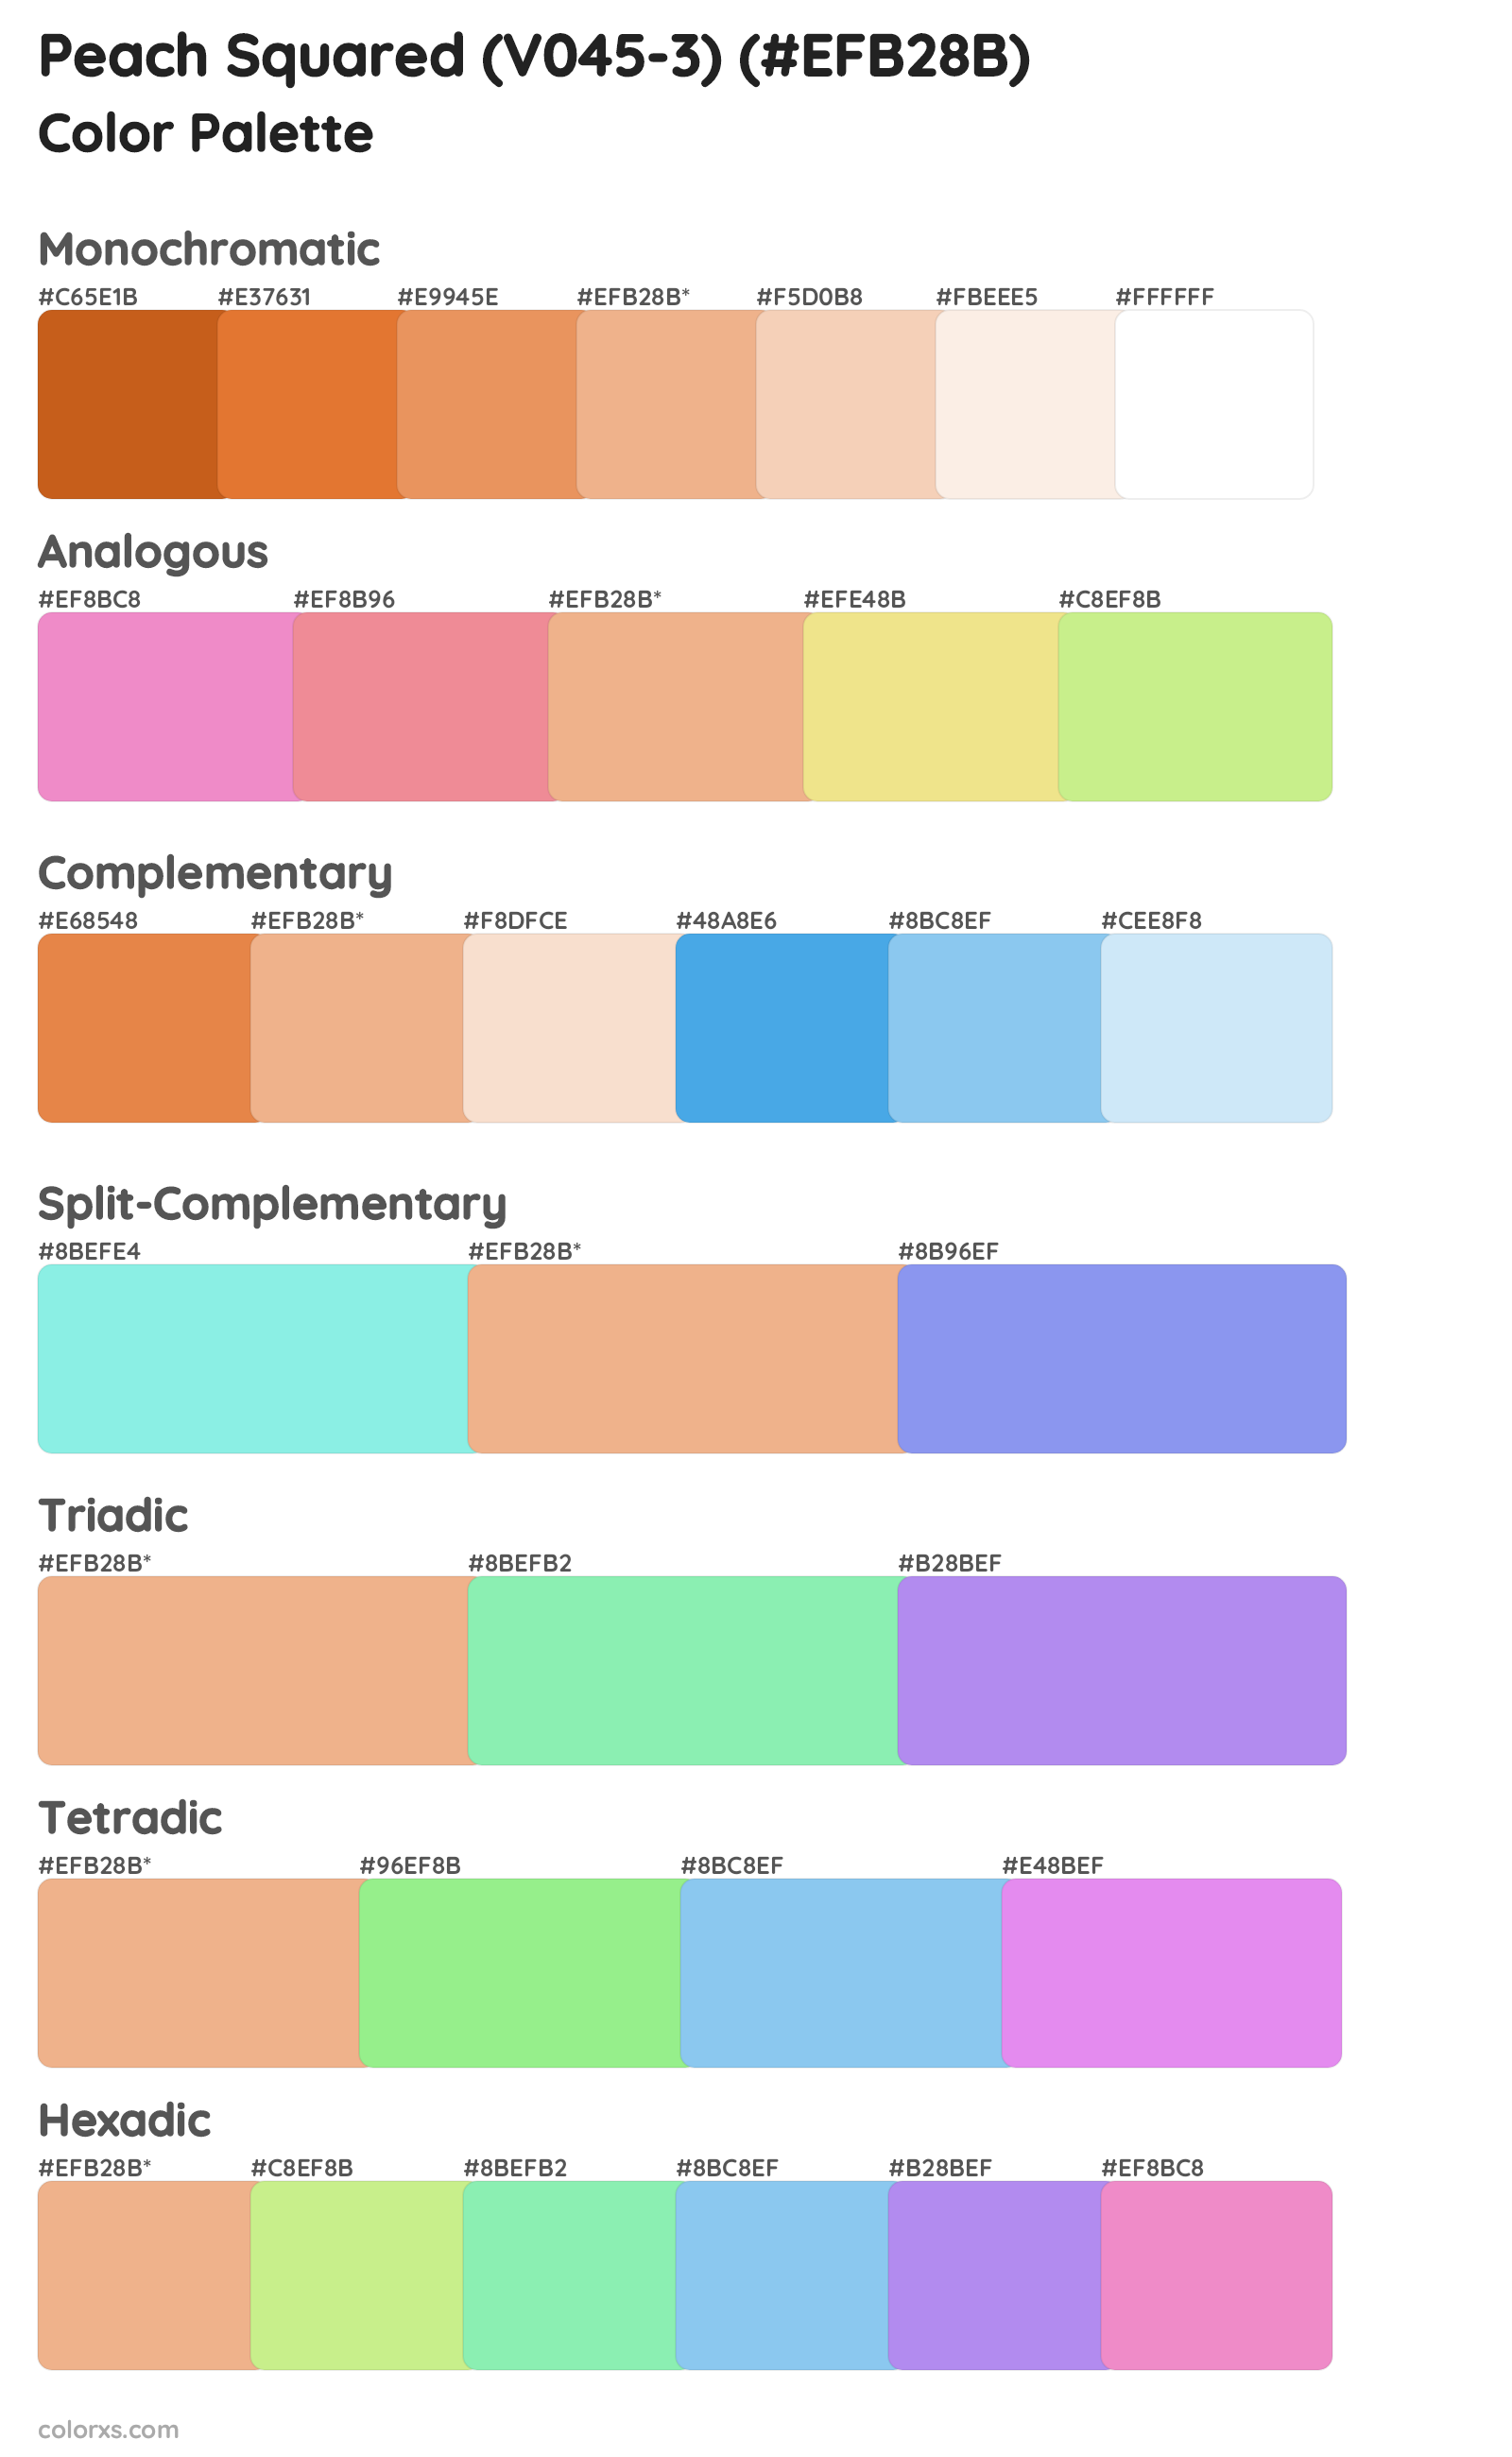 Peach Squared (V045-3) Color Scheme Palettes